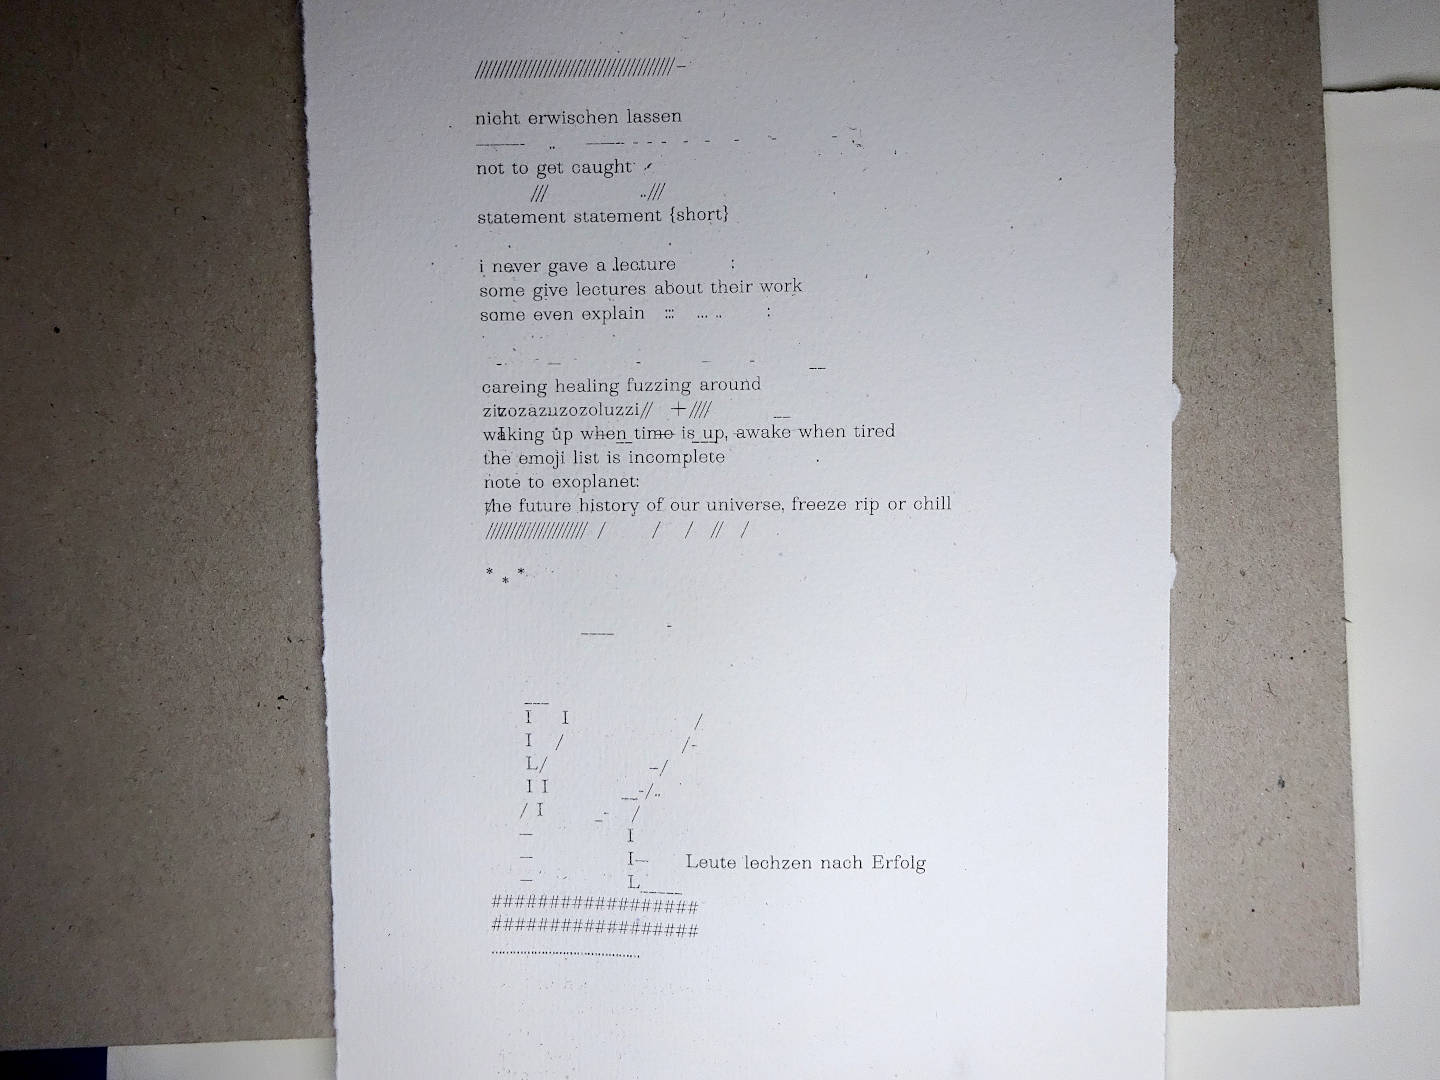 printed copy of the poem